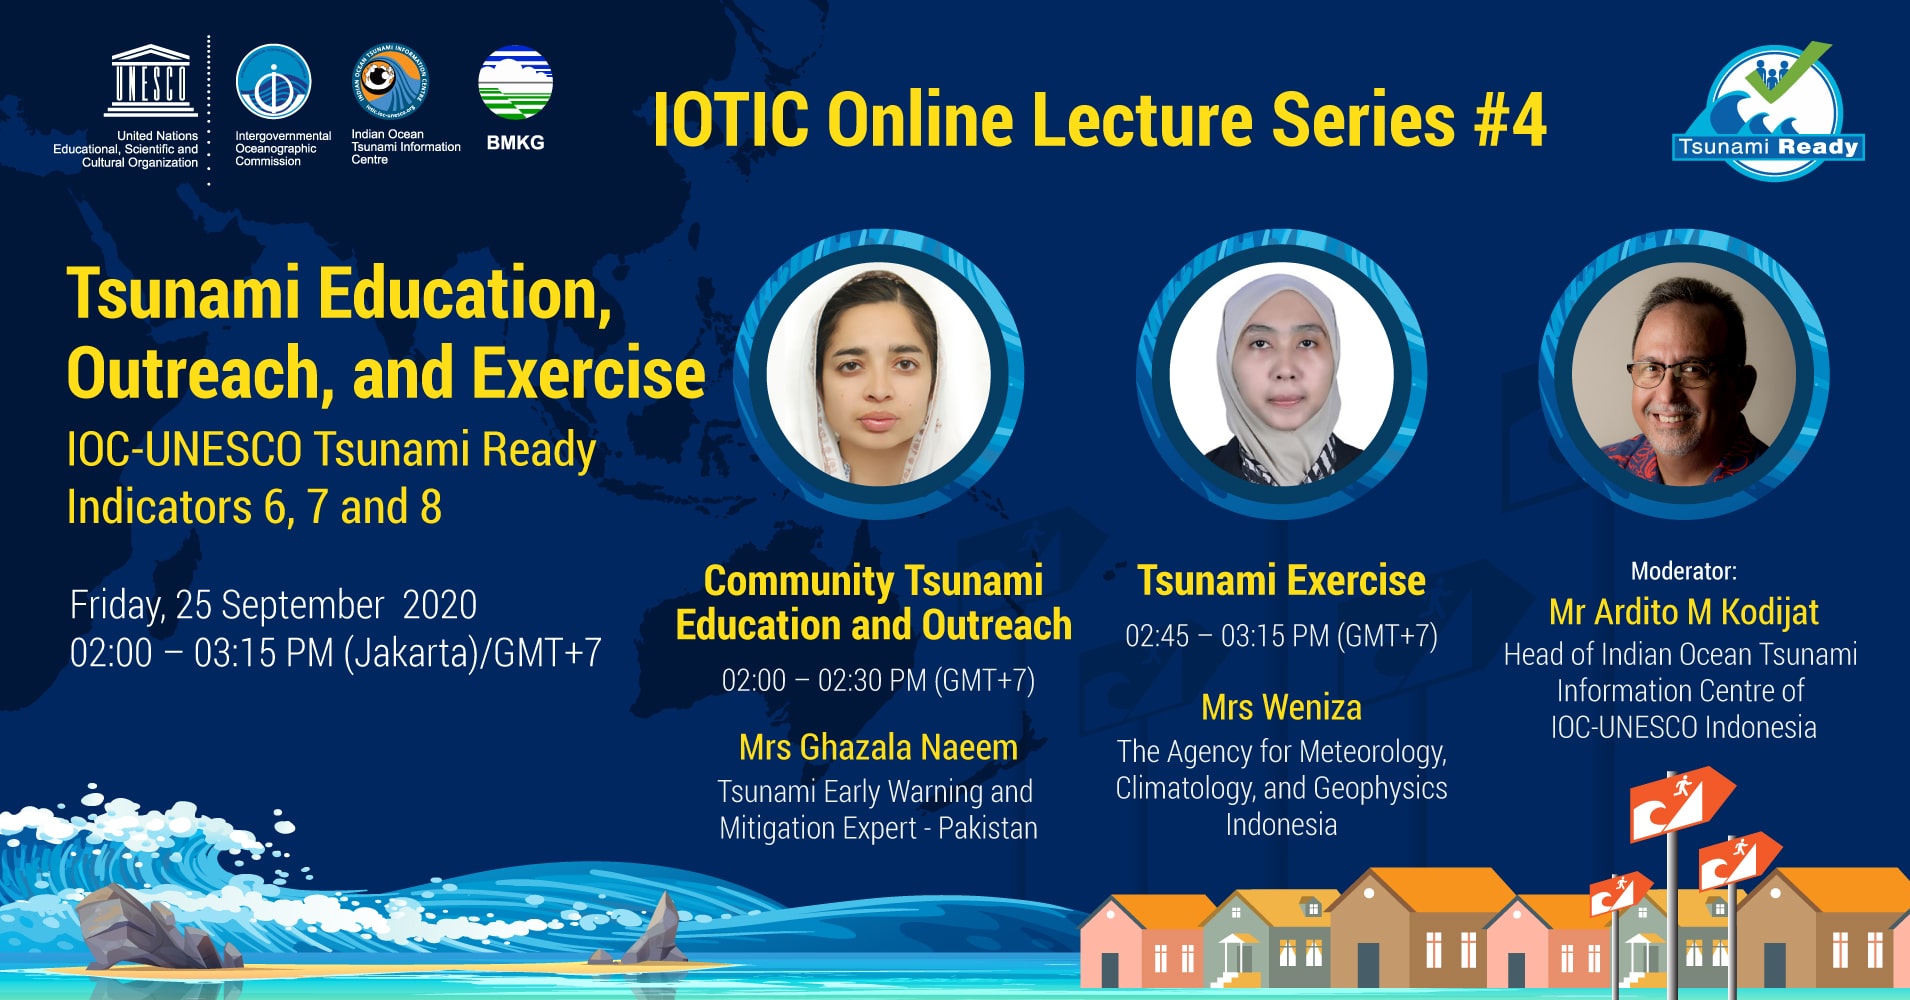 IOTIC Online Lecture Series #4